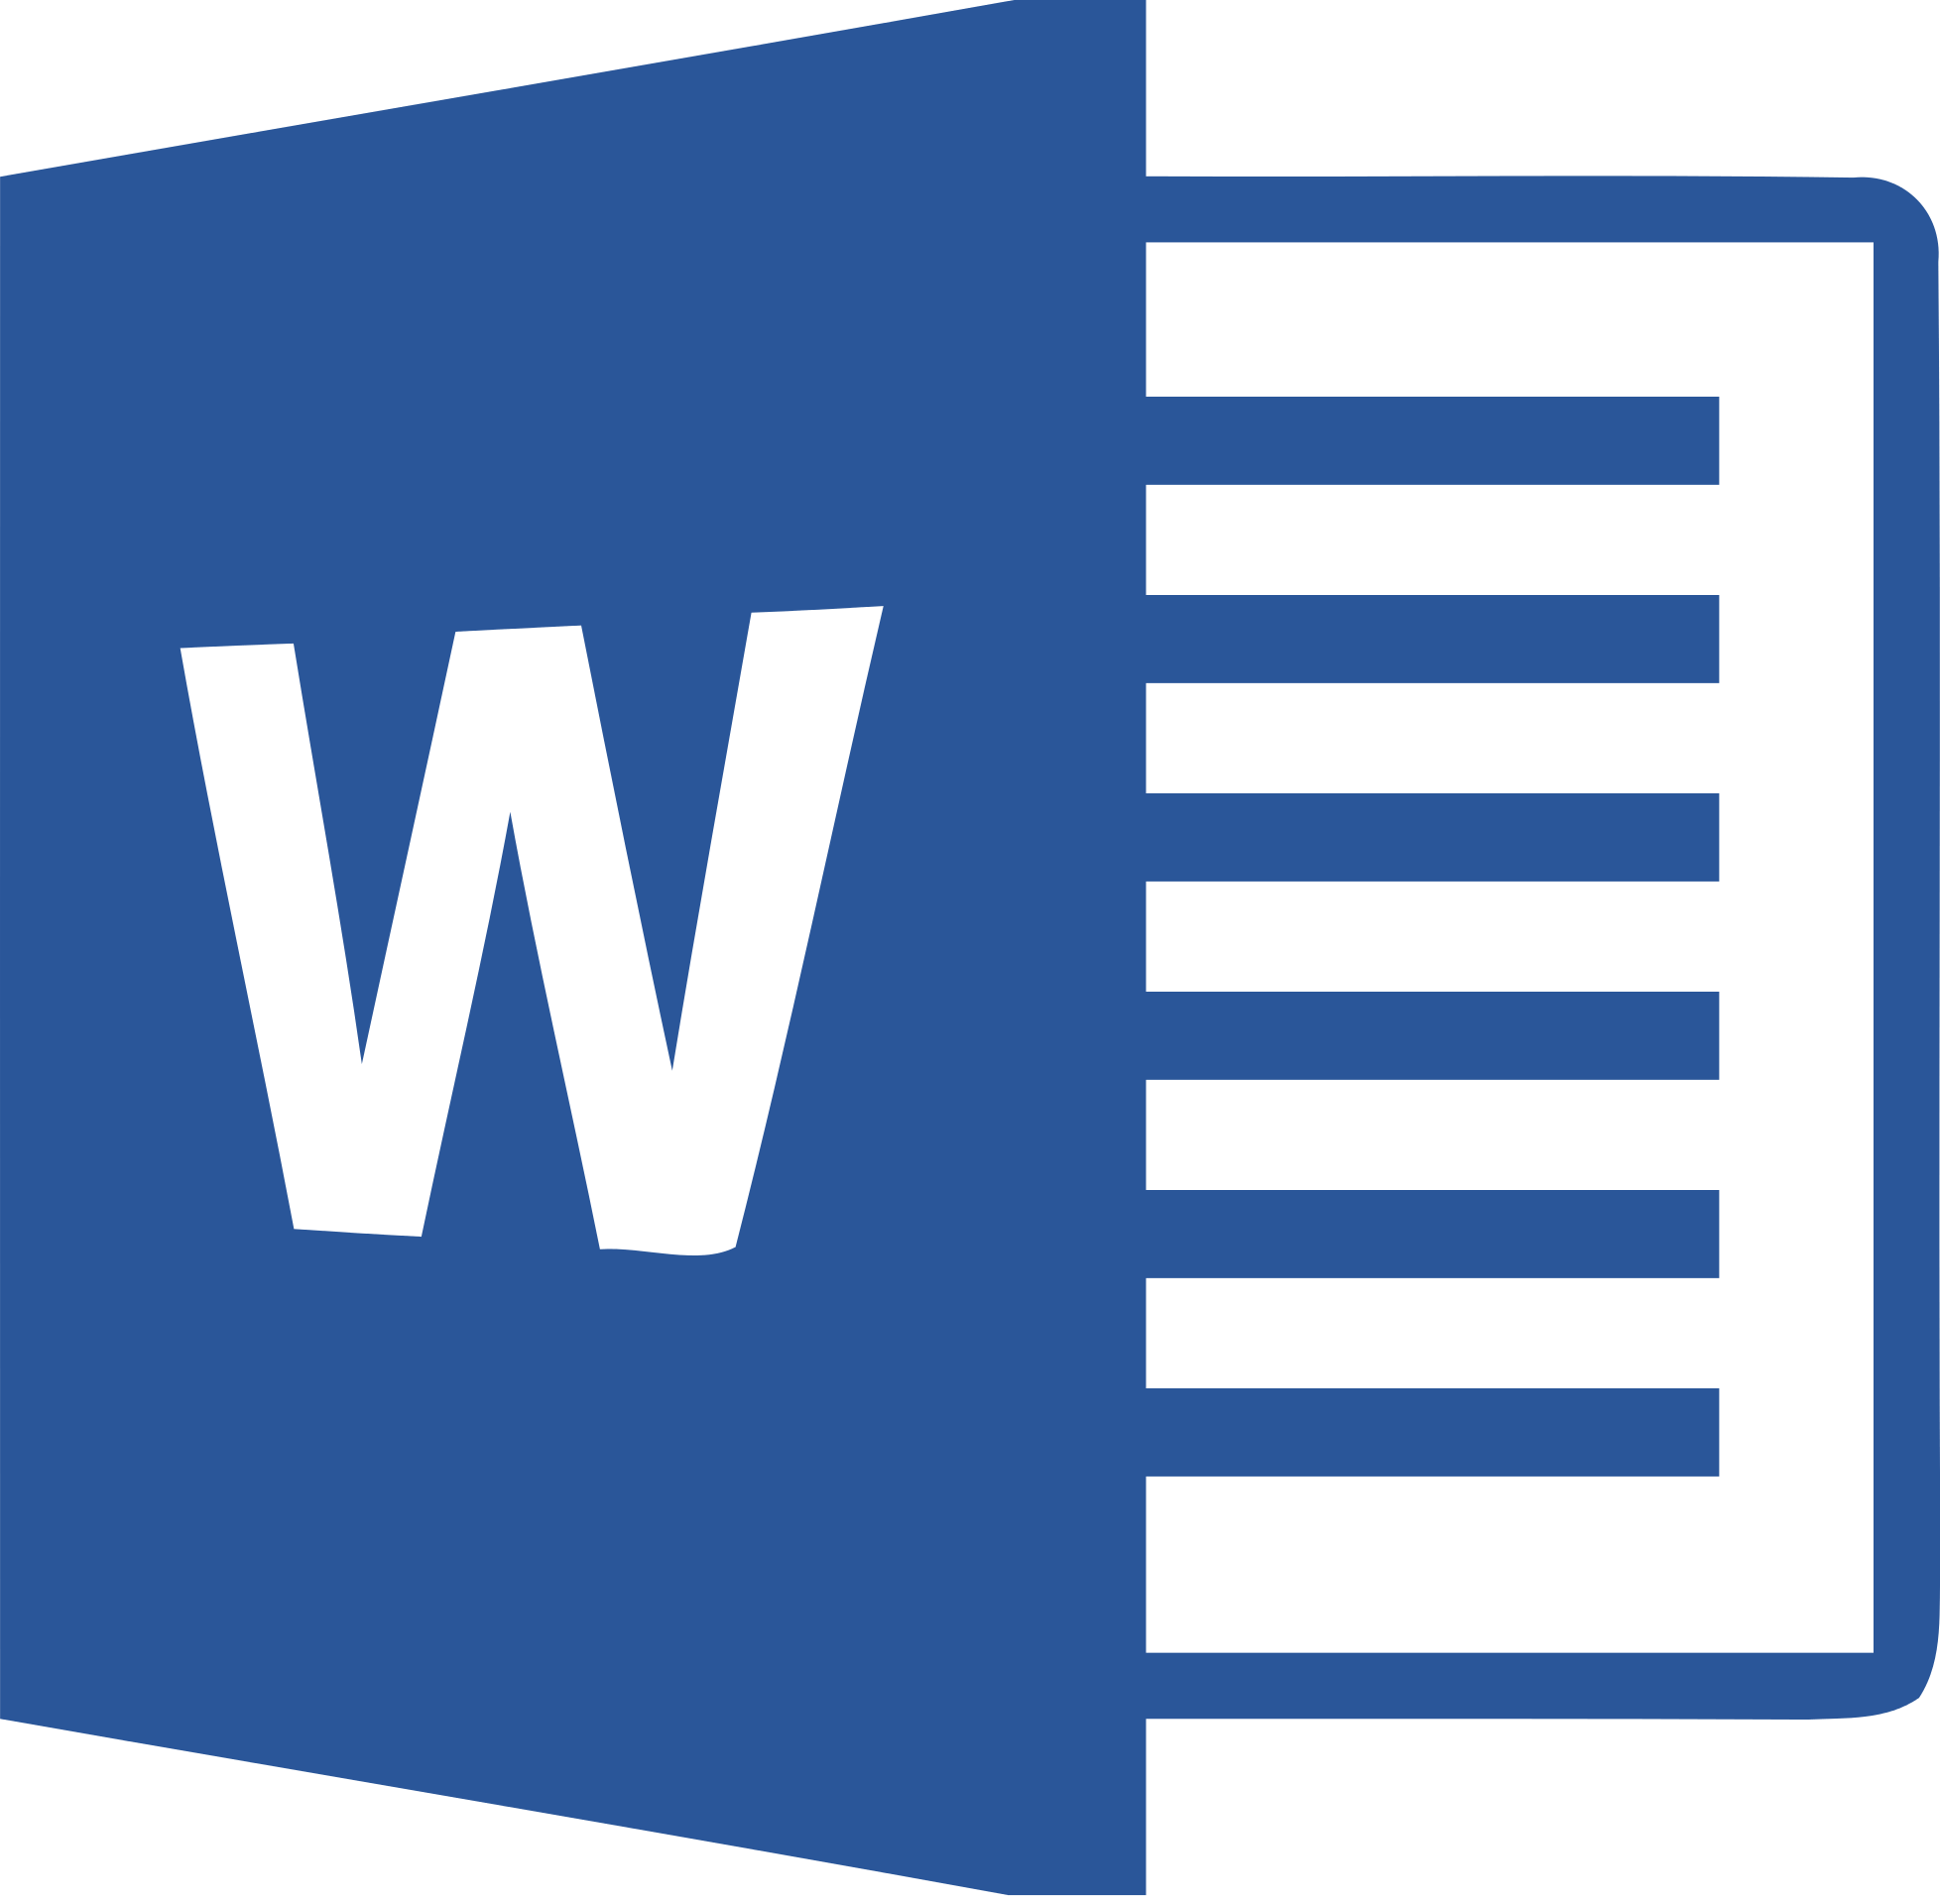 Blue Microsoft Word Logo - Image - Microsoft Word 2013 logo.png | Community Central | FANDOM ...